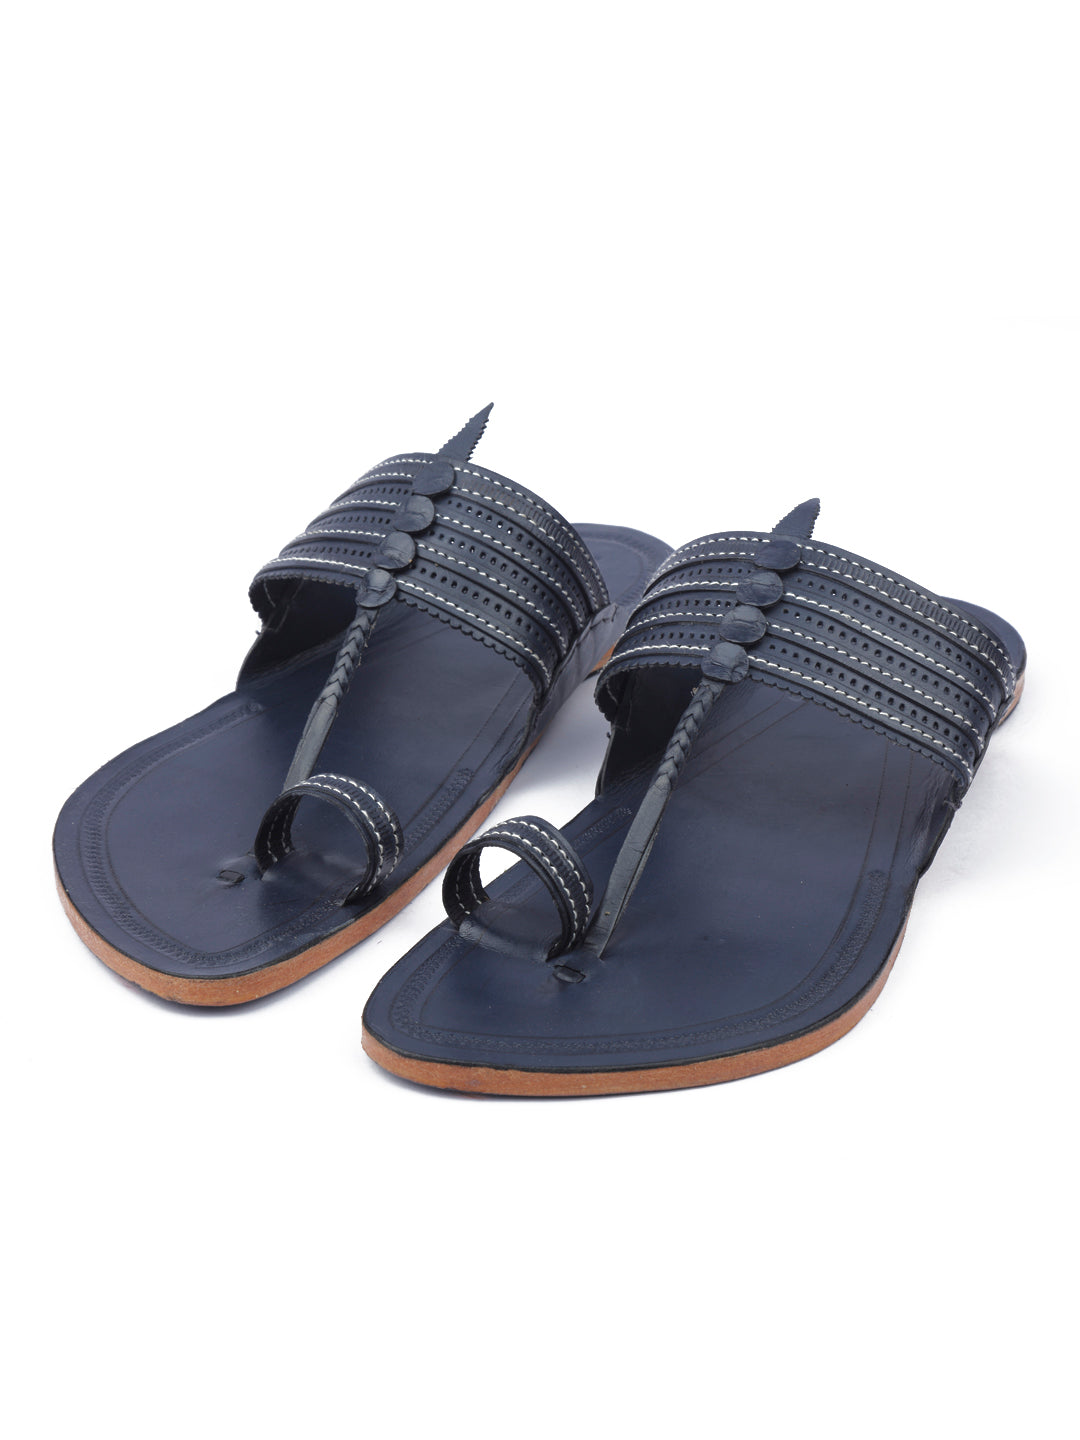 Sparx Soft Sole sandal..... - Gupta Shoe Palace Gurua | Facebook